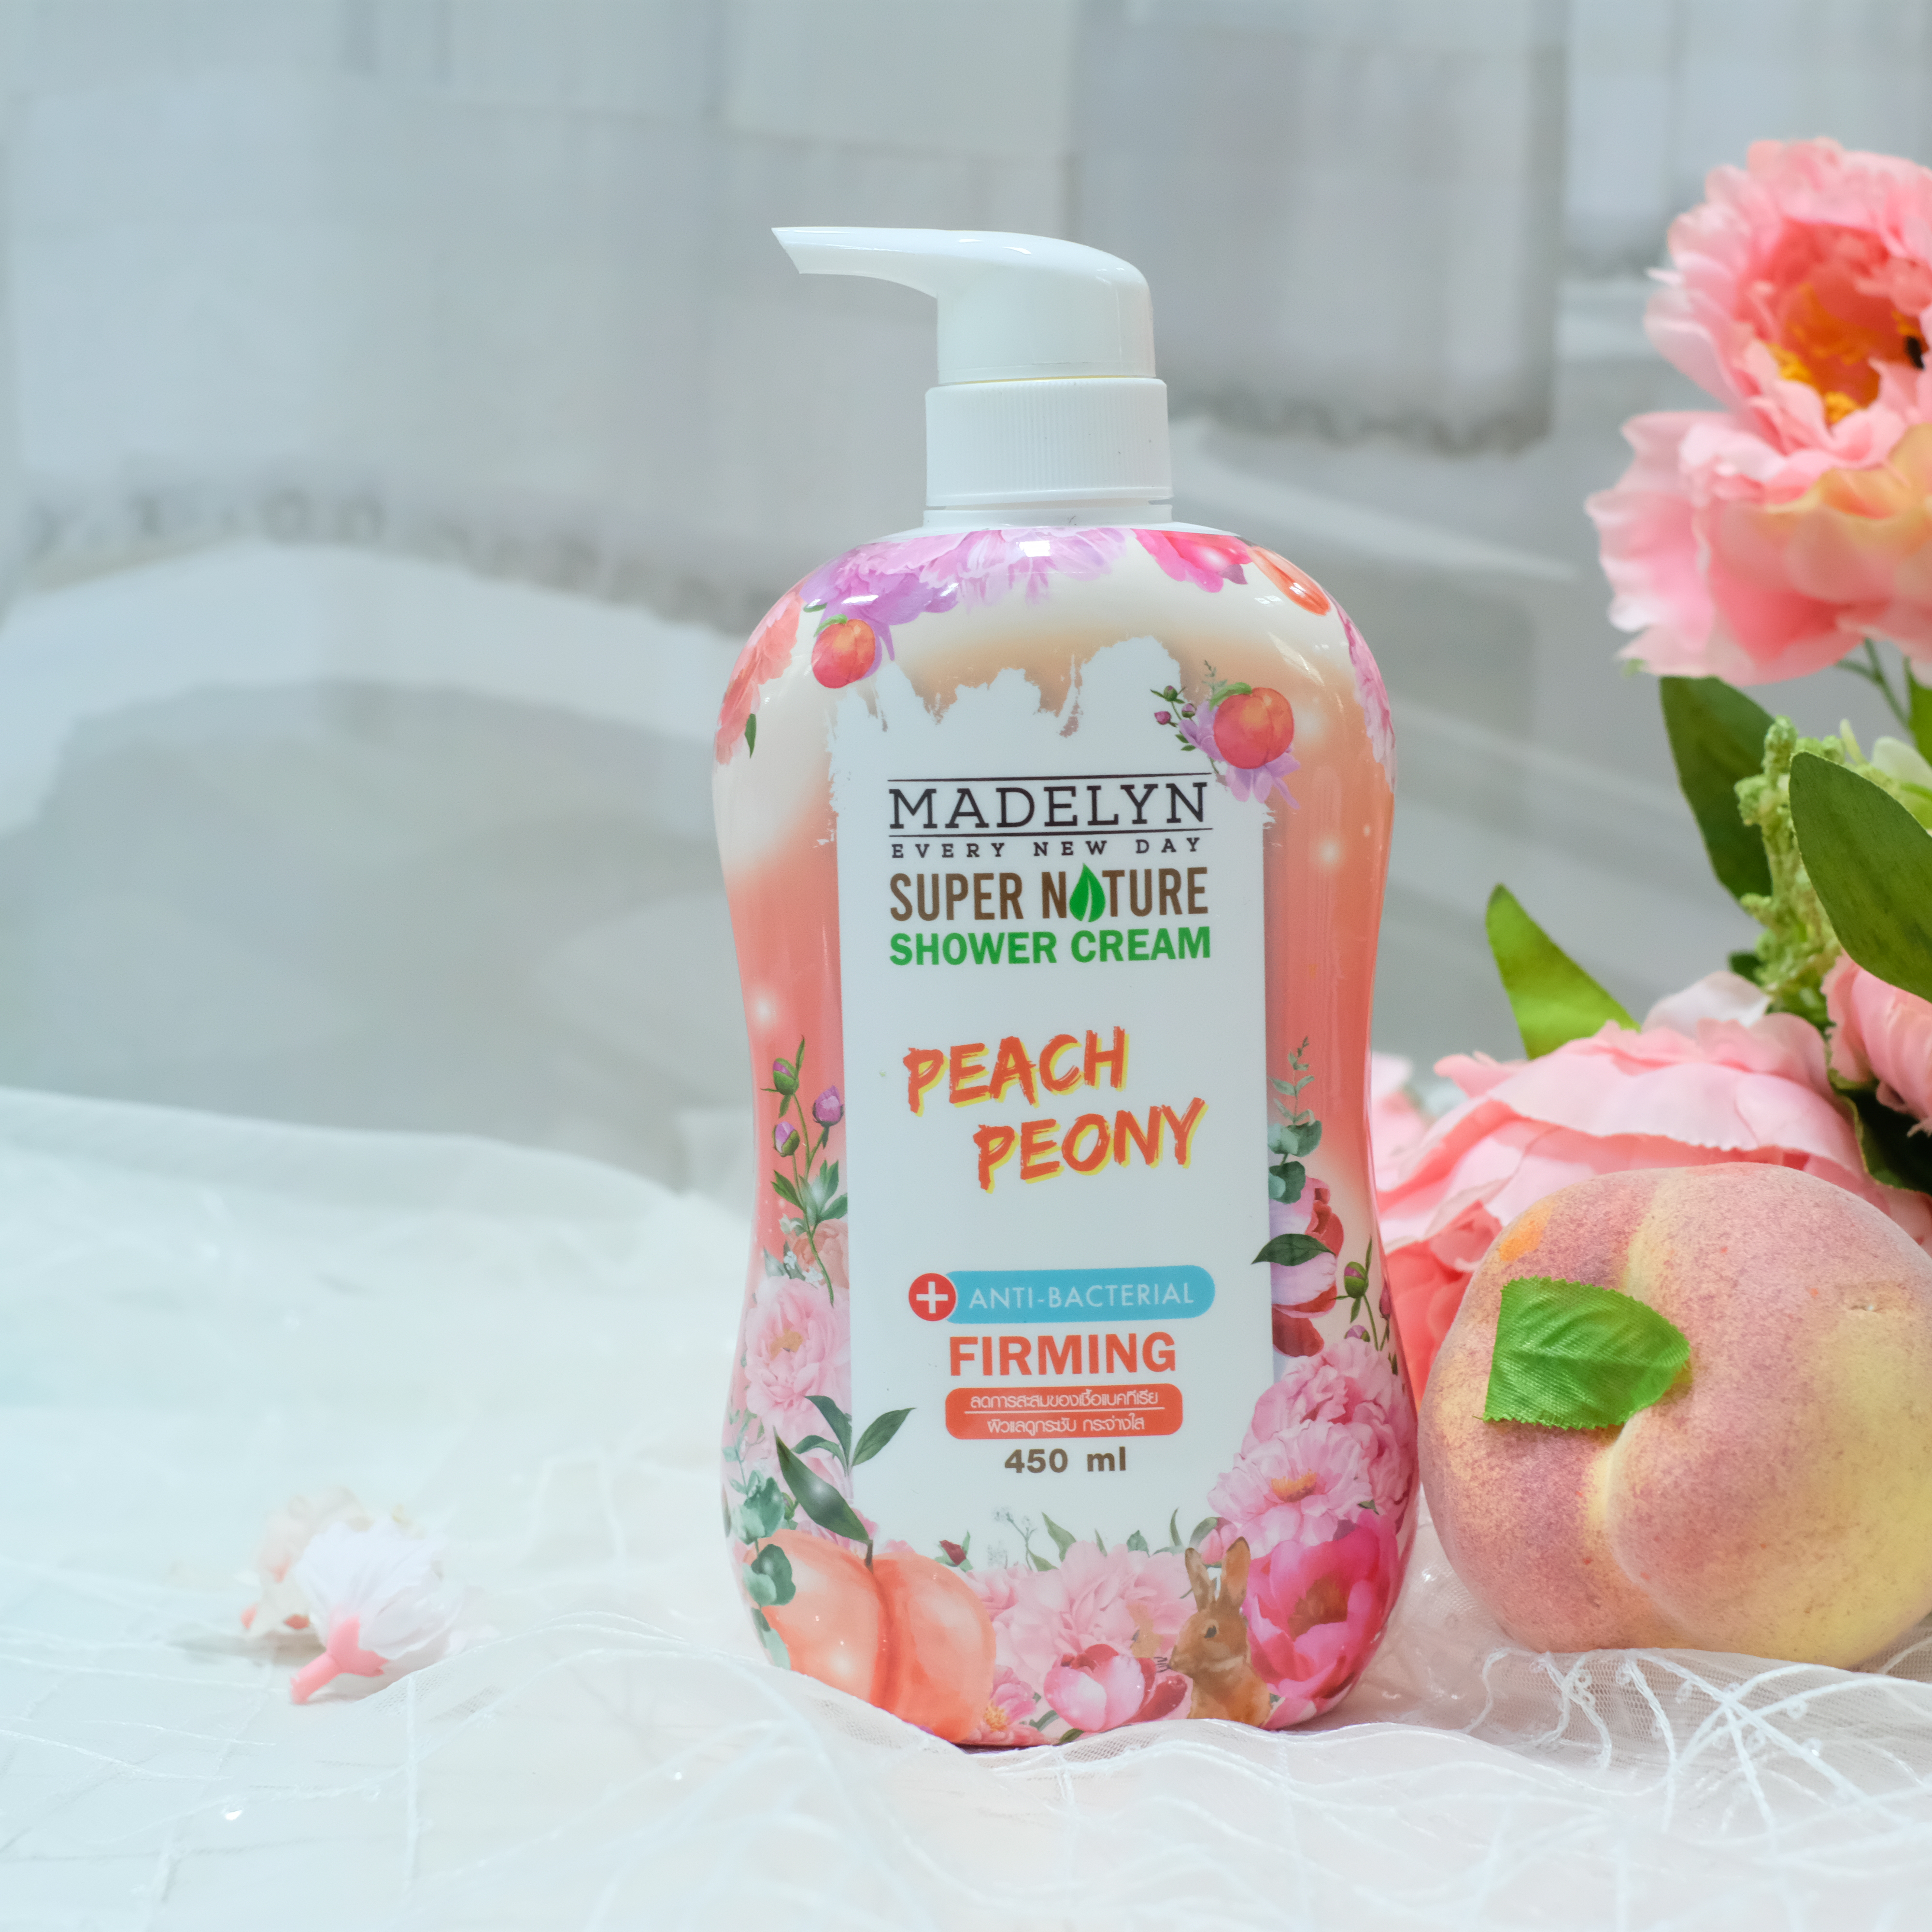 Madelyn Shower Cream Peach Peony 450 ml ครีมอาบน้ำสูตรแอนตี้แบคทีเรีย หอมสดใส ชวนหลงรักตลอดวัน ฟองเยอะ ล้างออกง่าย